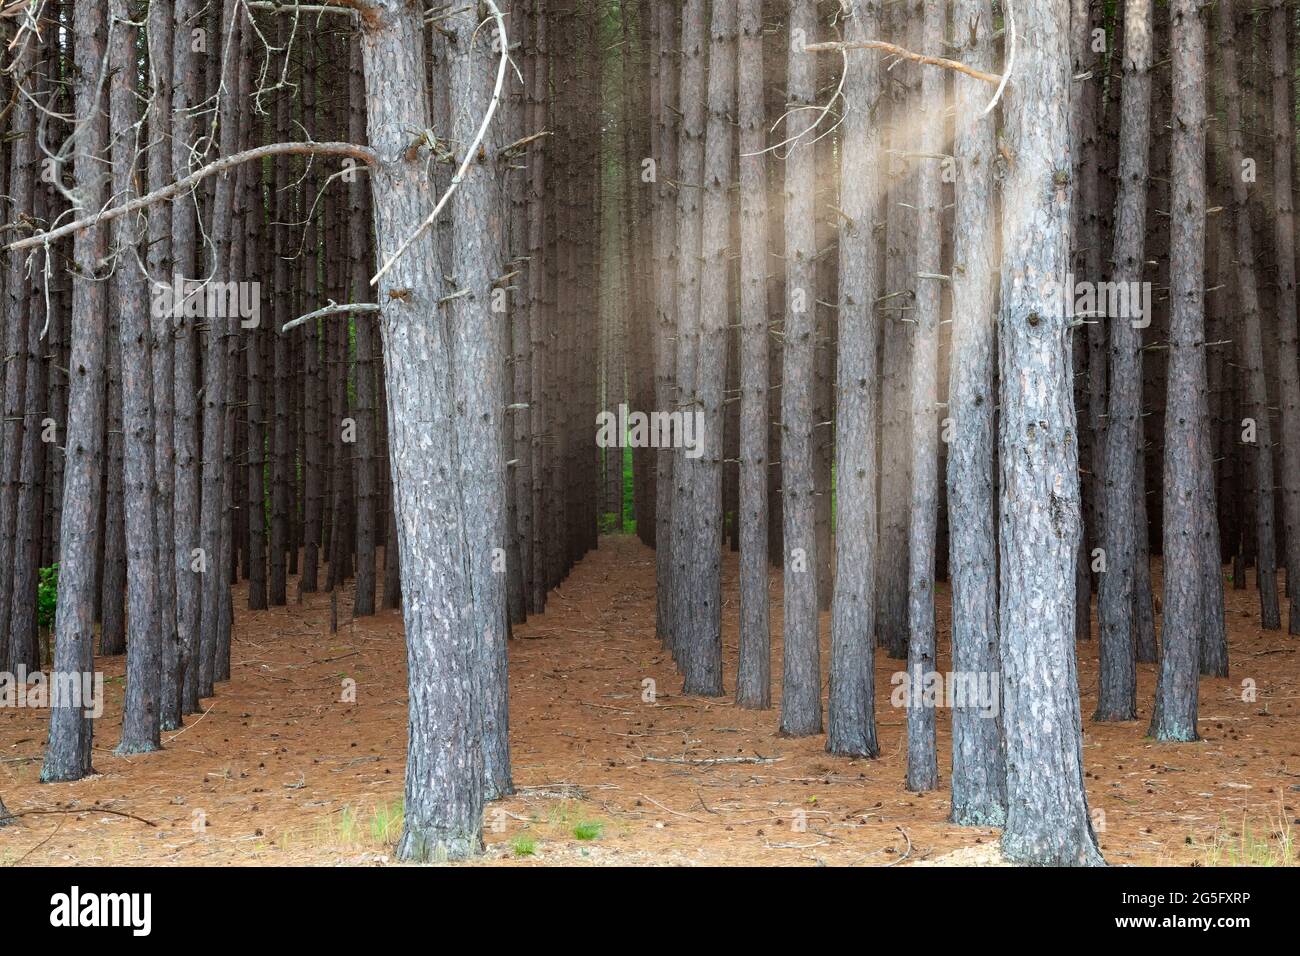 Evergreen Tree Trunks with sun beams filtering through, Ontario, Canada Stock Photo